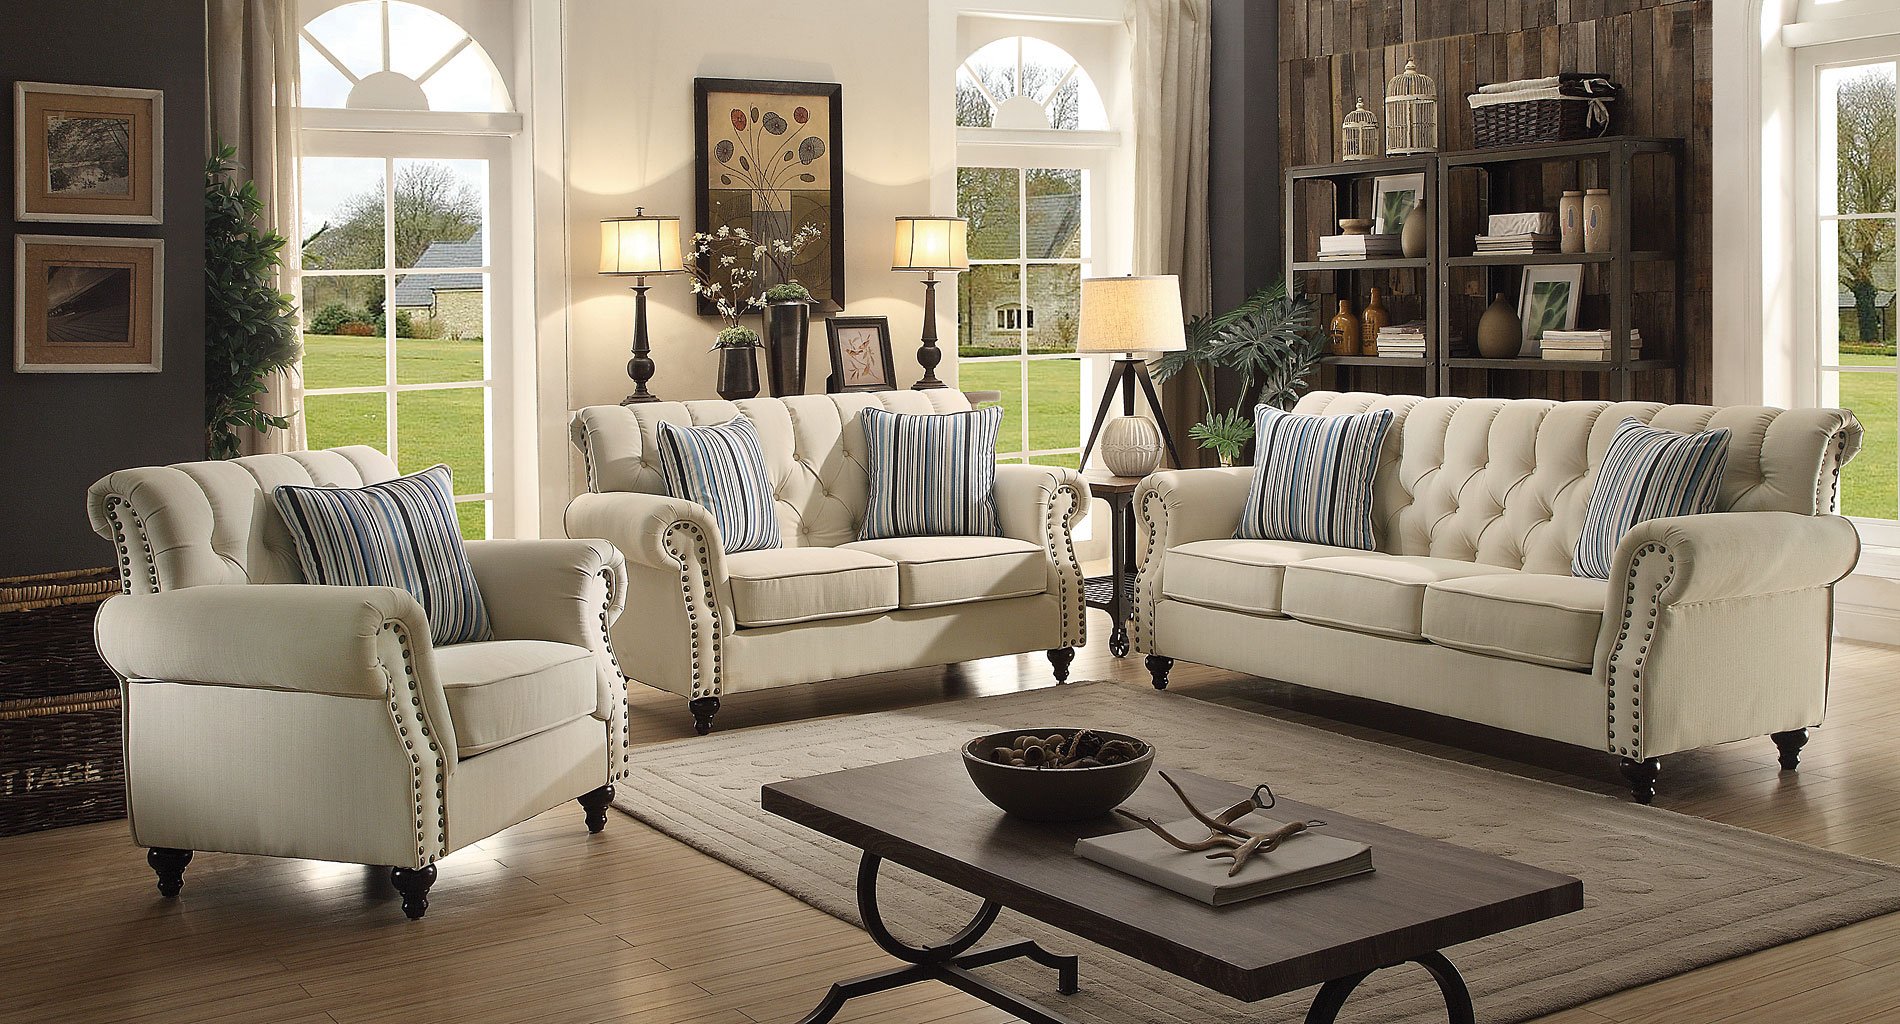 cream colored living room furniture sets